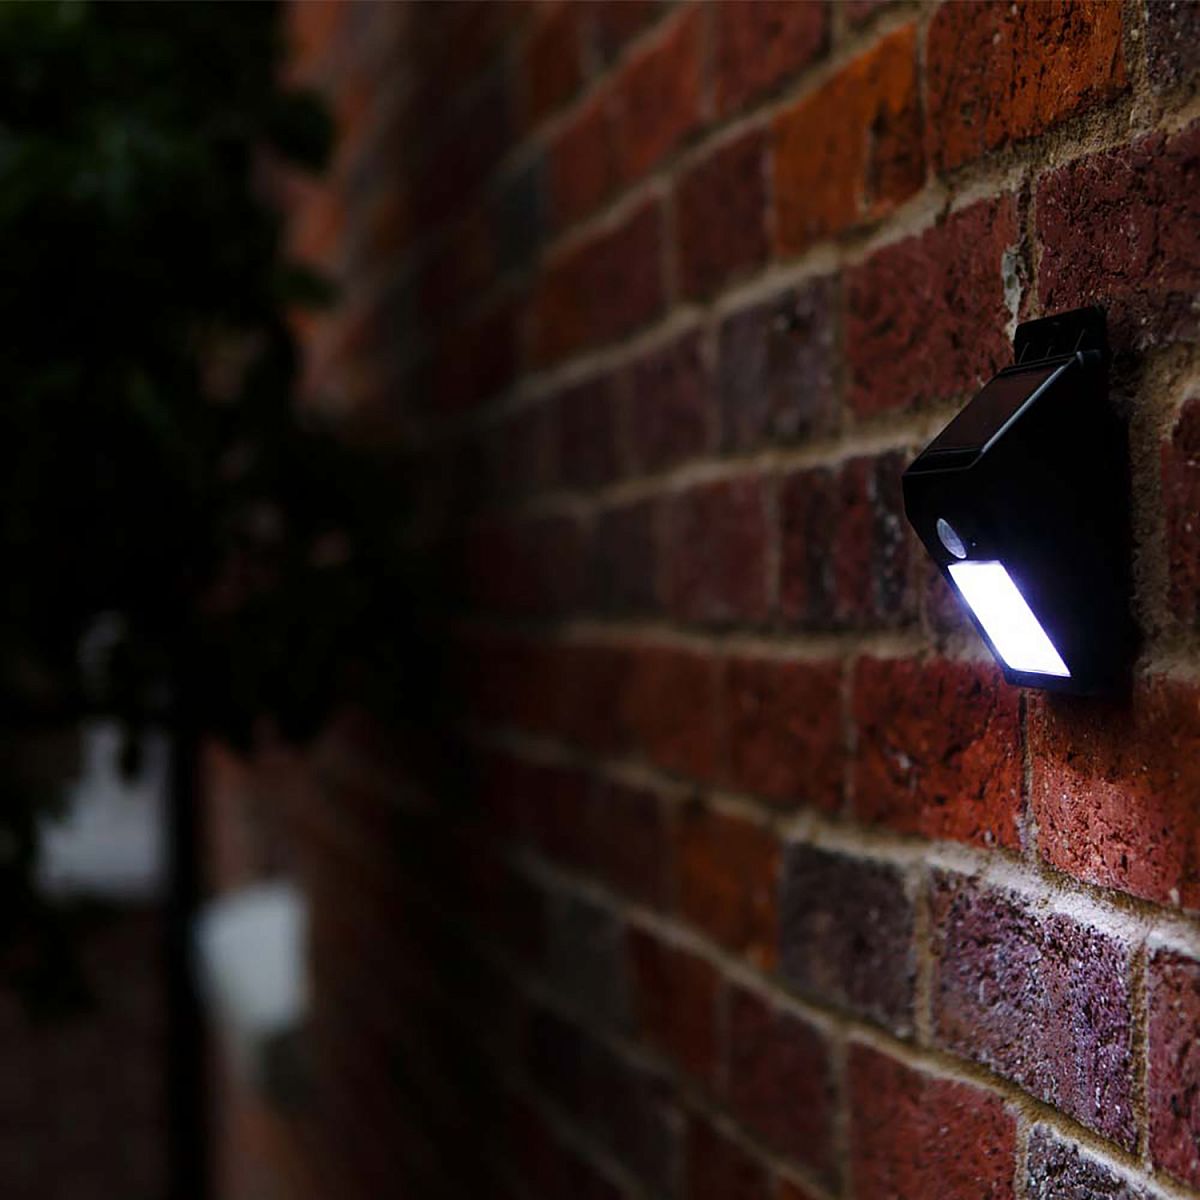 ECO Wedge XT Premium Solar Security Lights Sensor for Outside